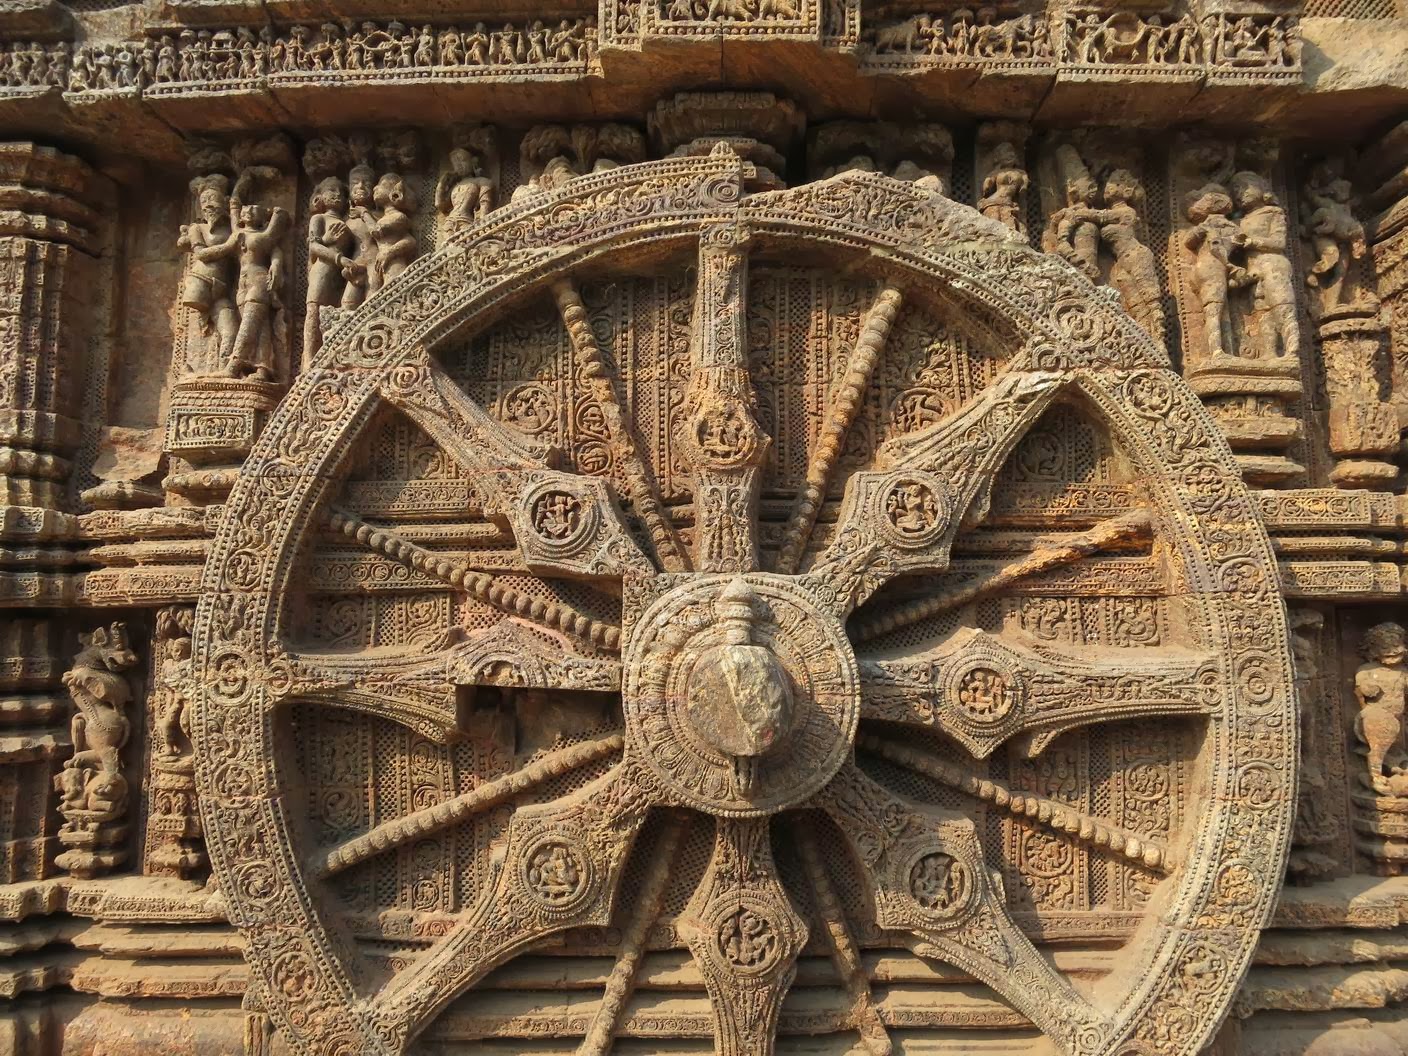 Konark Wheel Konark Temple Wheel Wheel of Konark Konark Sun Dial